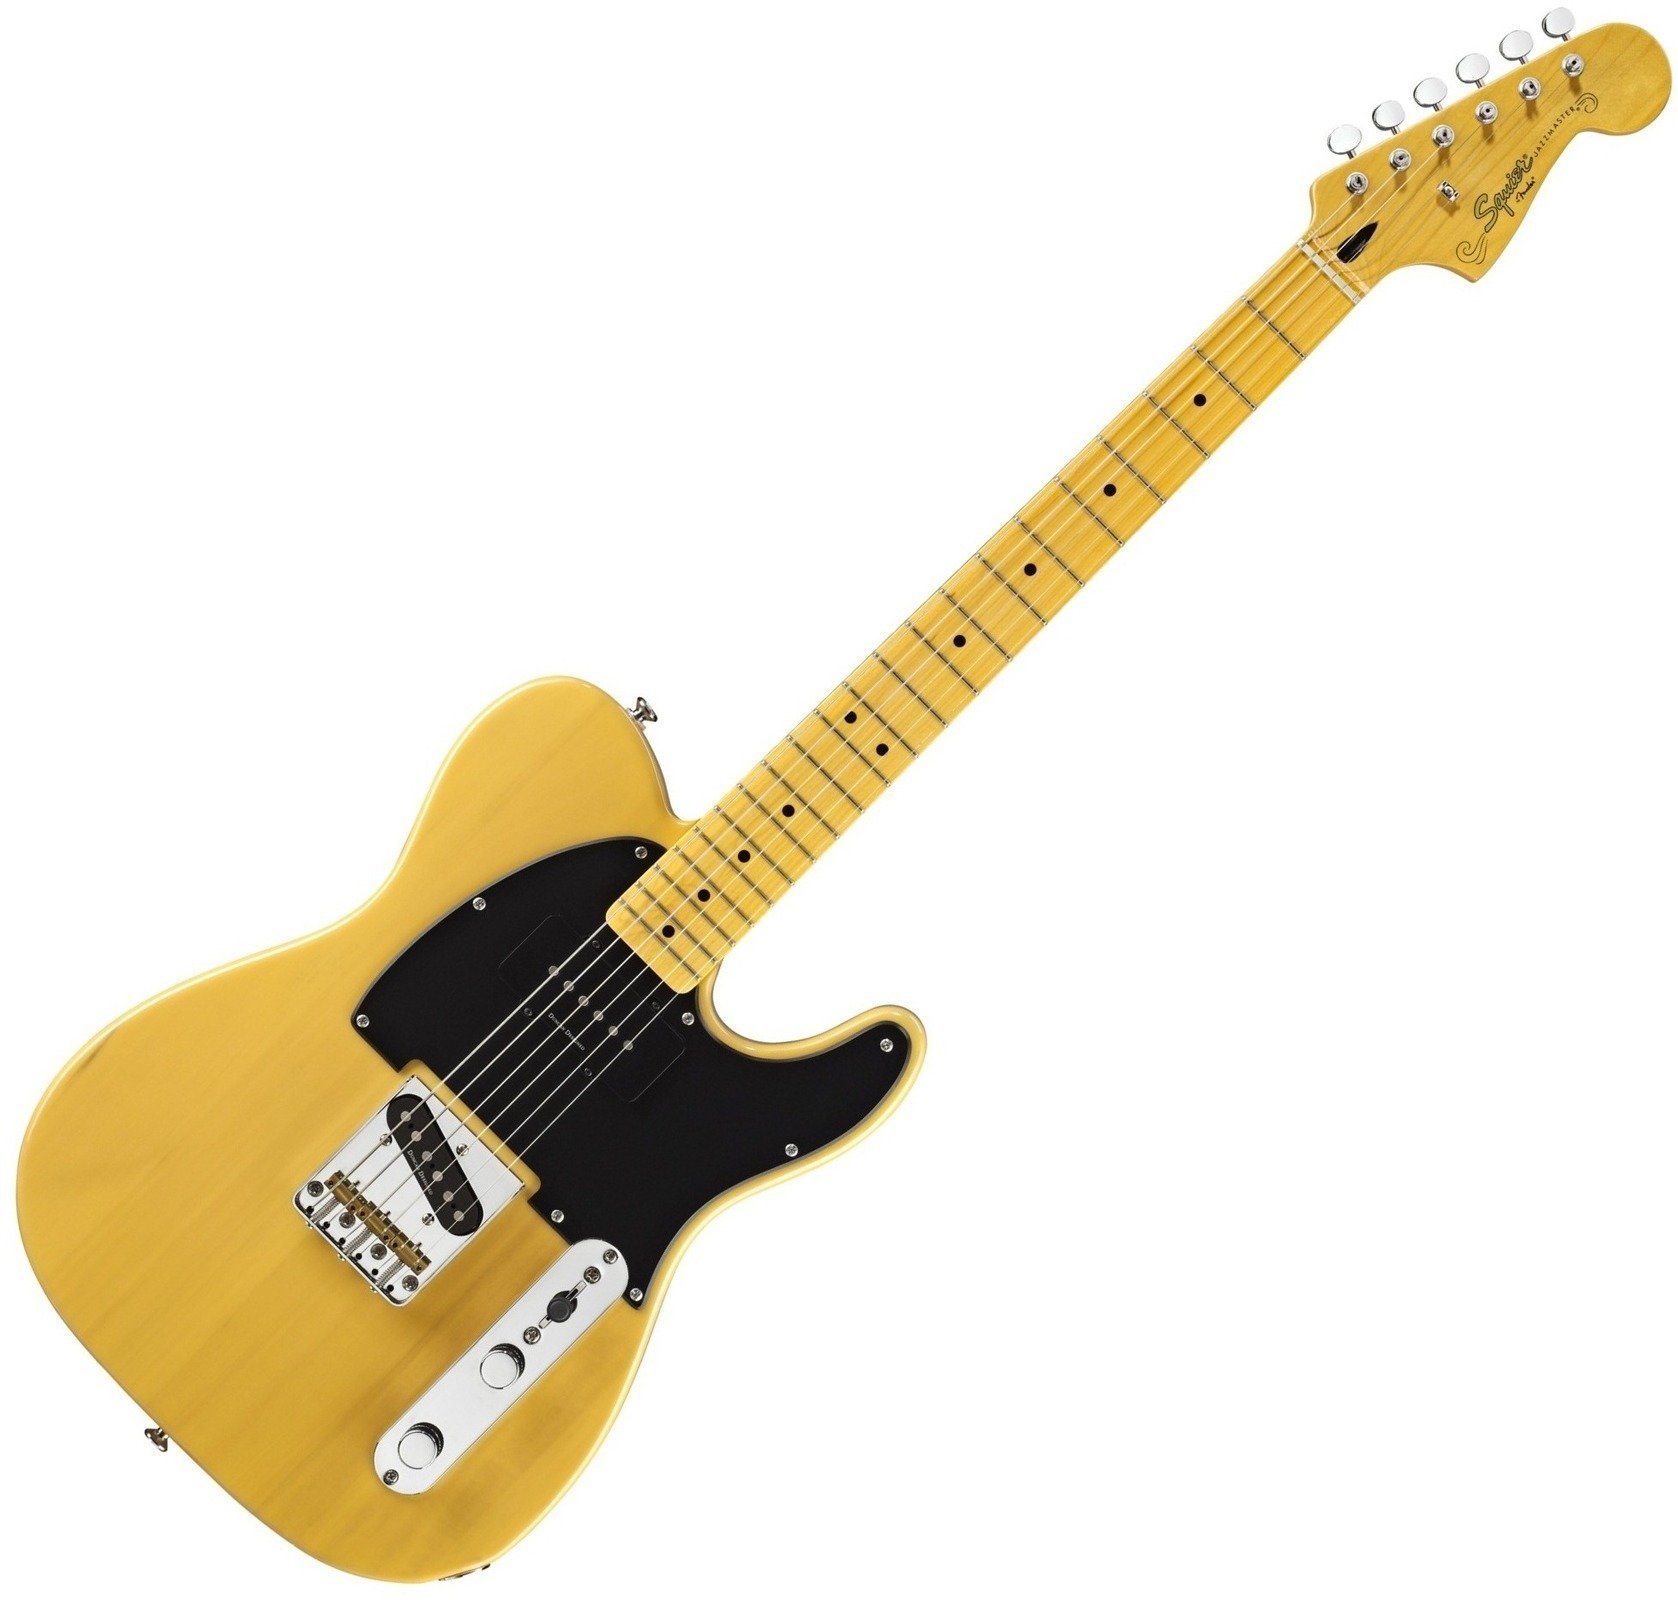 Sähkökitara Fender Squier Vintage Modified Telecaster Special White Blonde